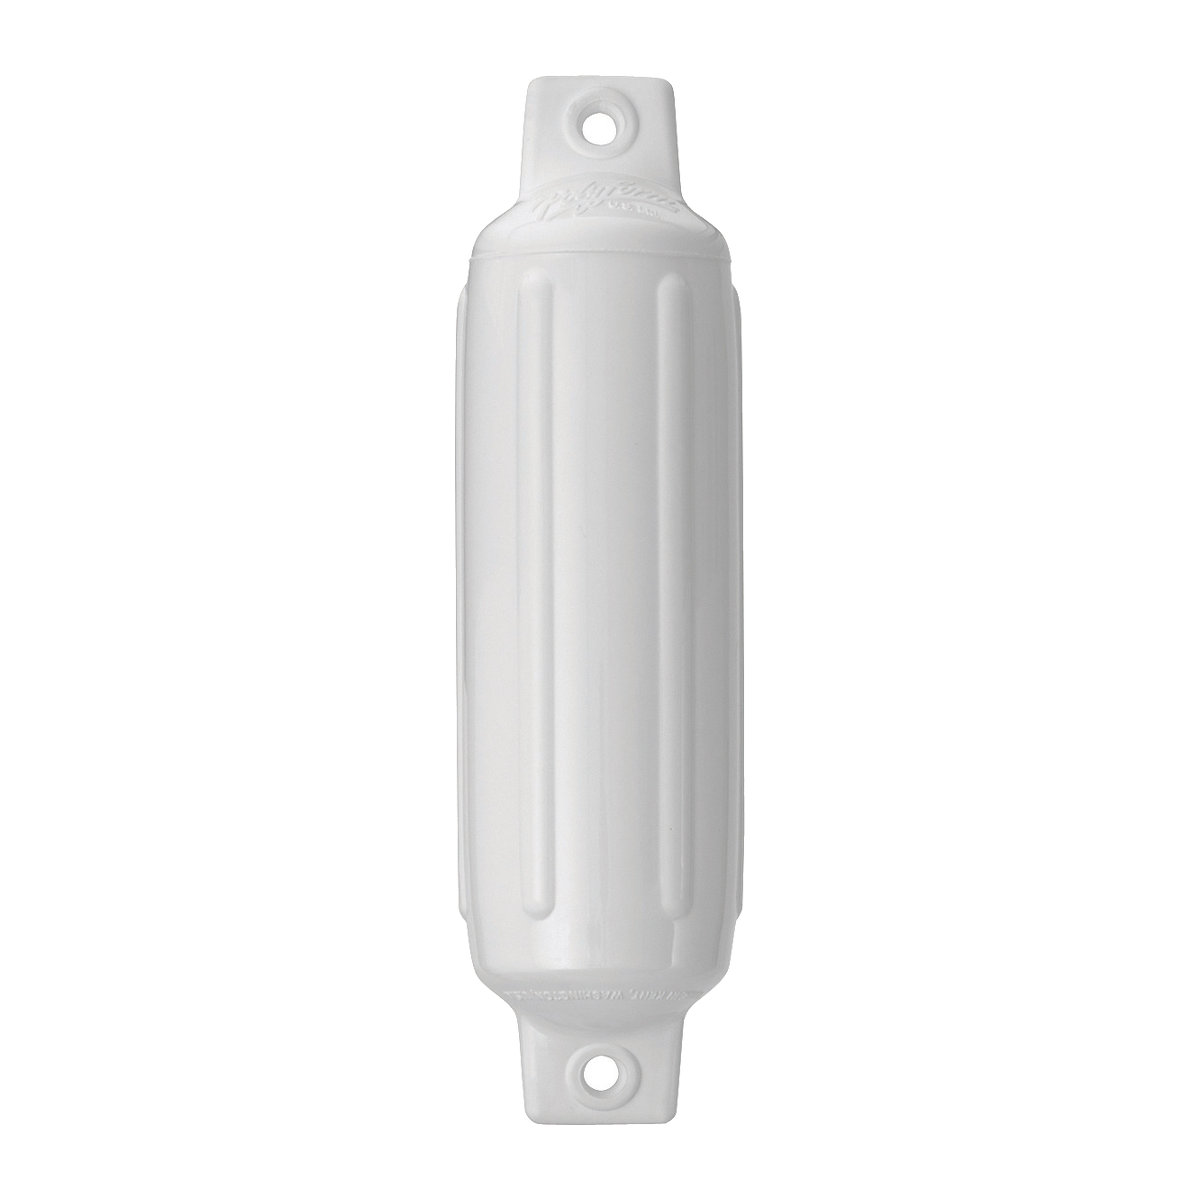 Polyform pare-battage type G-5 - blanc, 67,8 x 21,6cm  